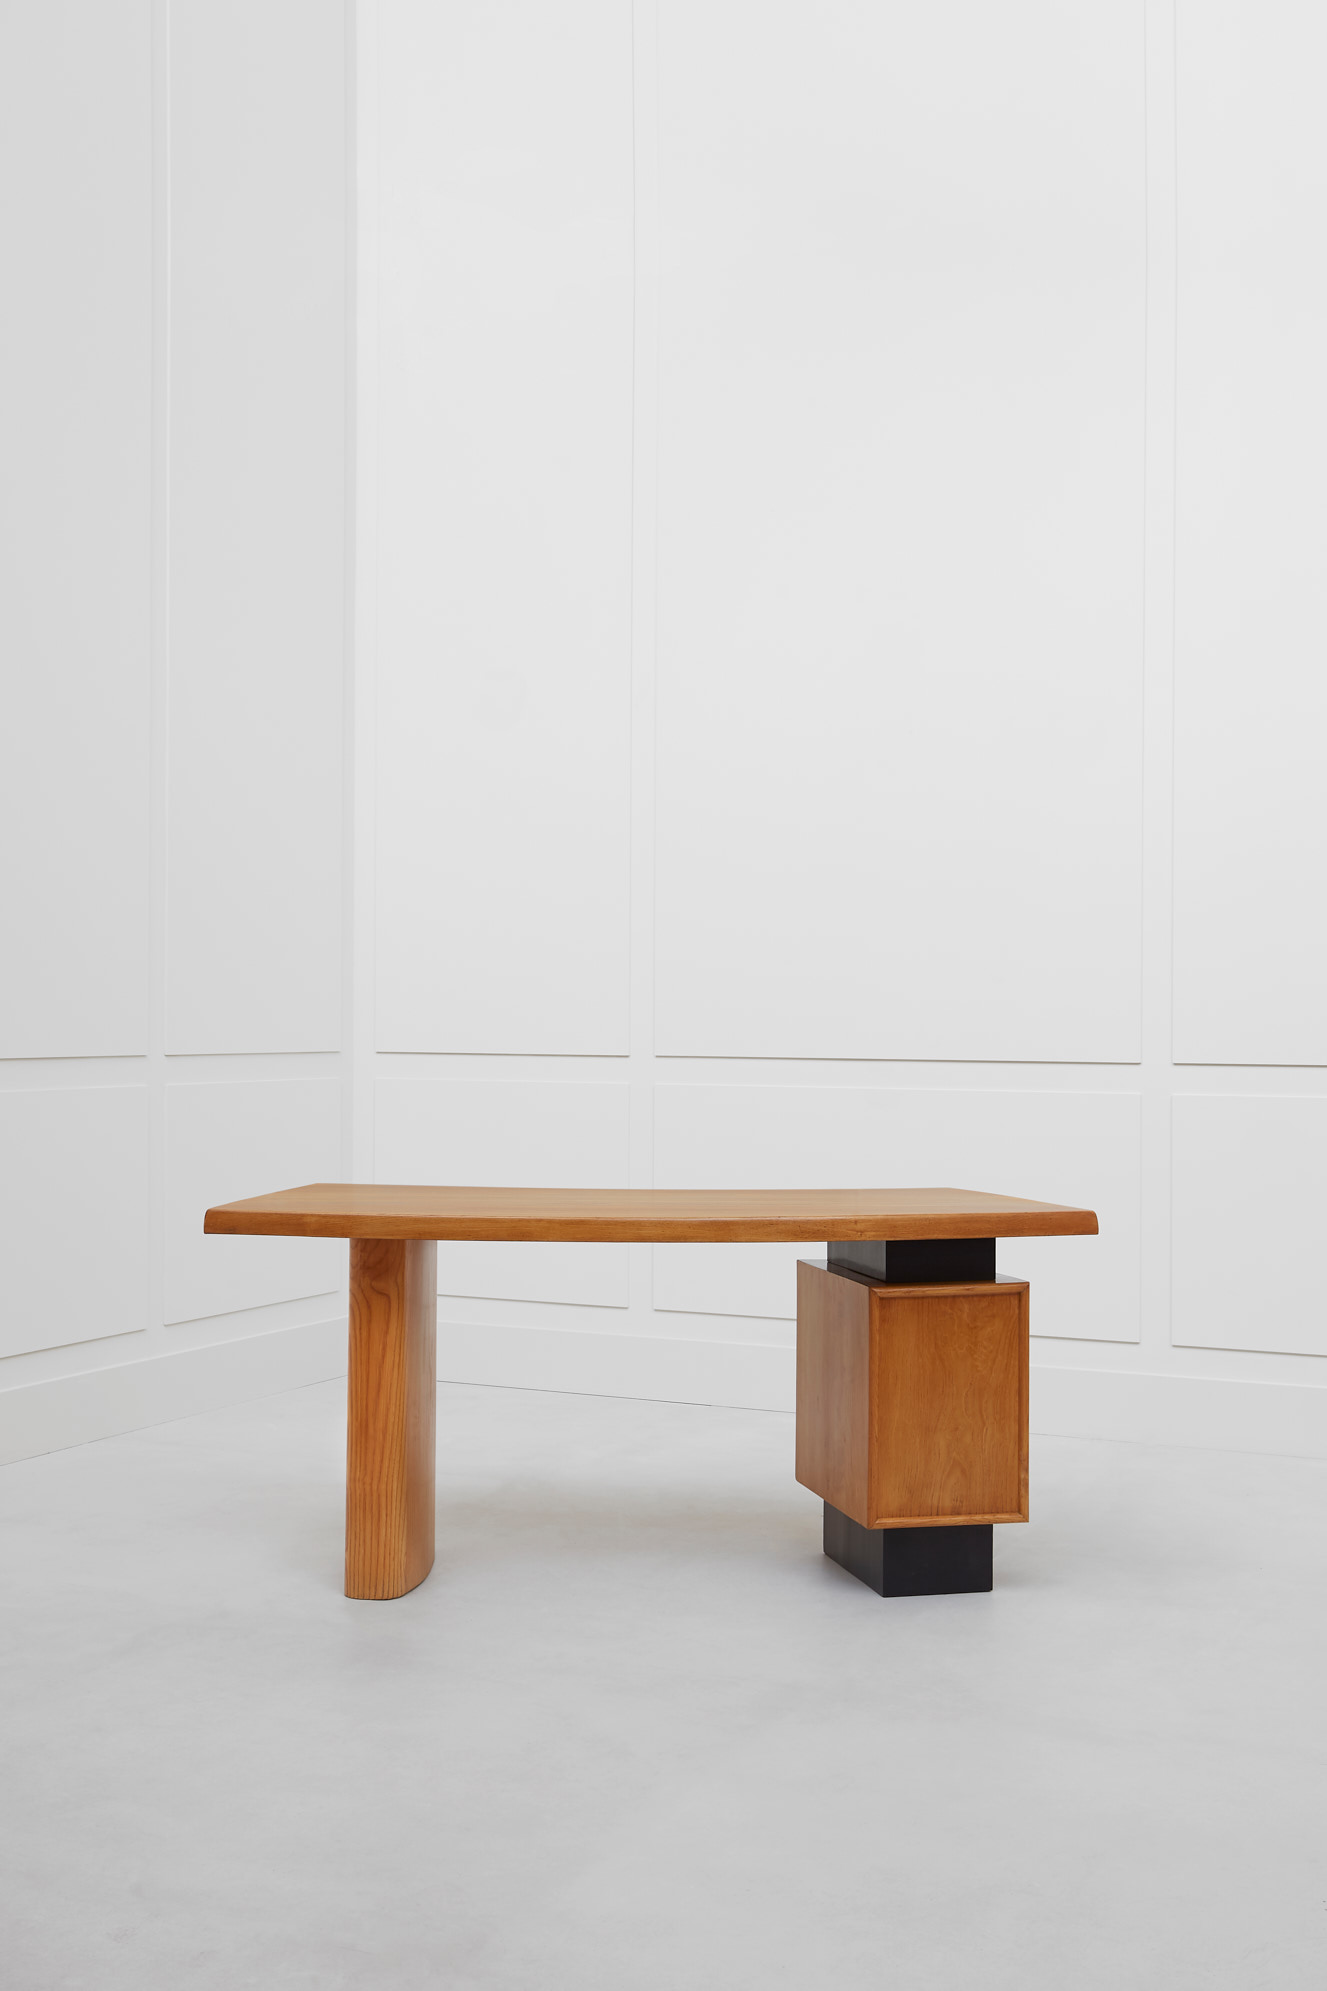 Charlotte Perriand & Pierre Jeanneret, Desk model n°9, vue 03